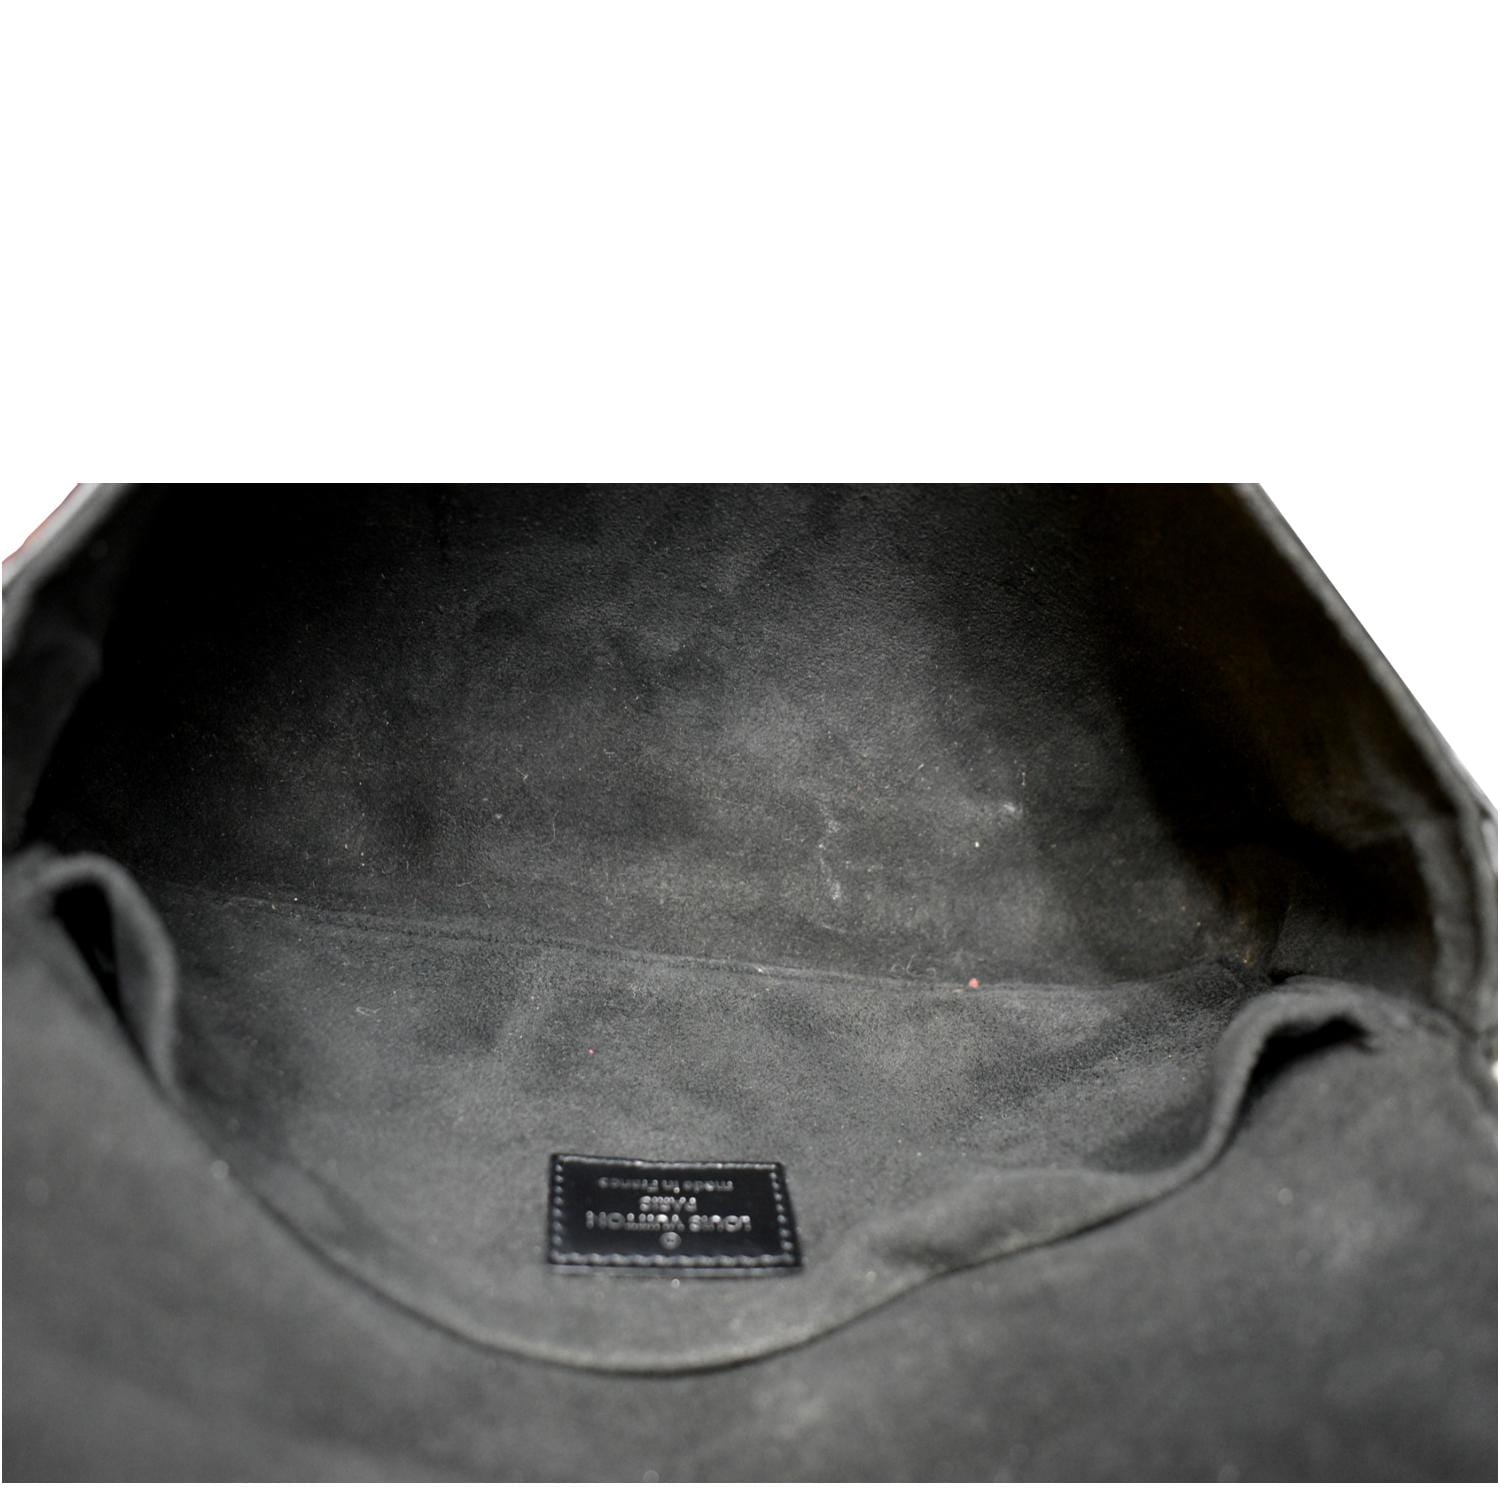 Louis Vuitton POCHETTE FELICIE Epi leather. Pink & black  Louis vuitton  handbags outlet, Louis vuitton handbags, Louis vuitton handbags black